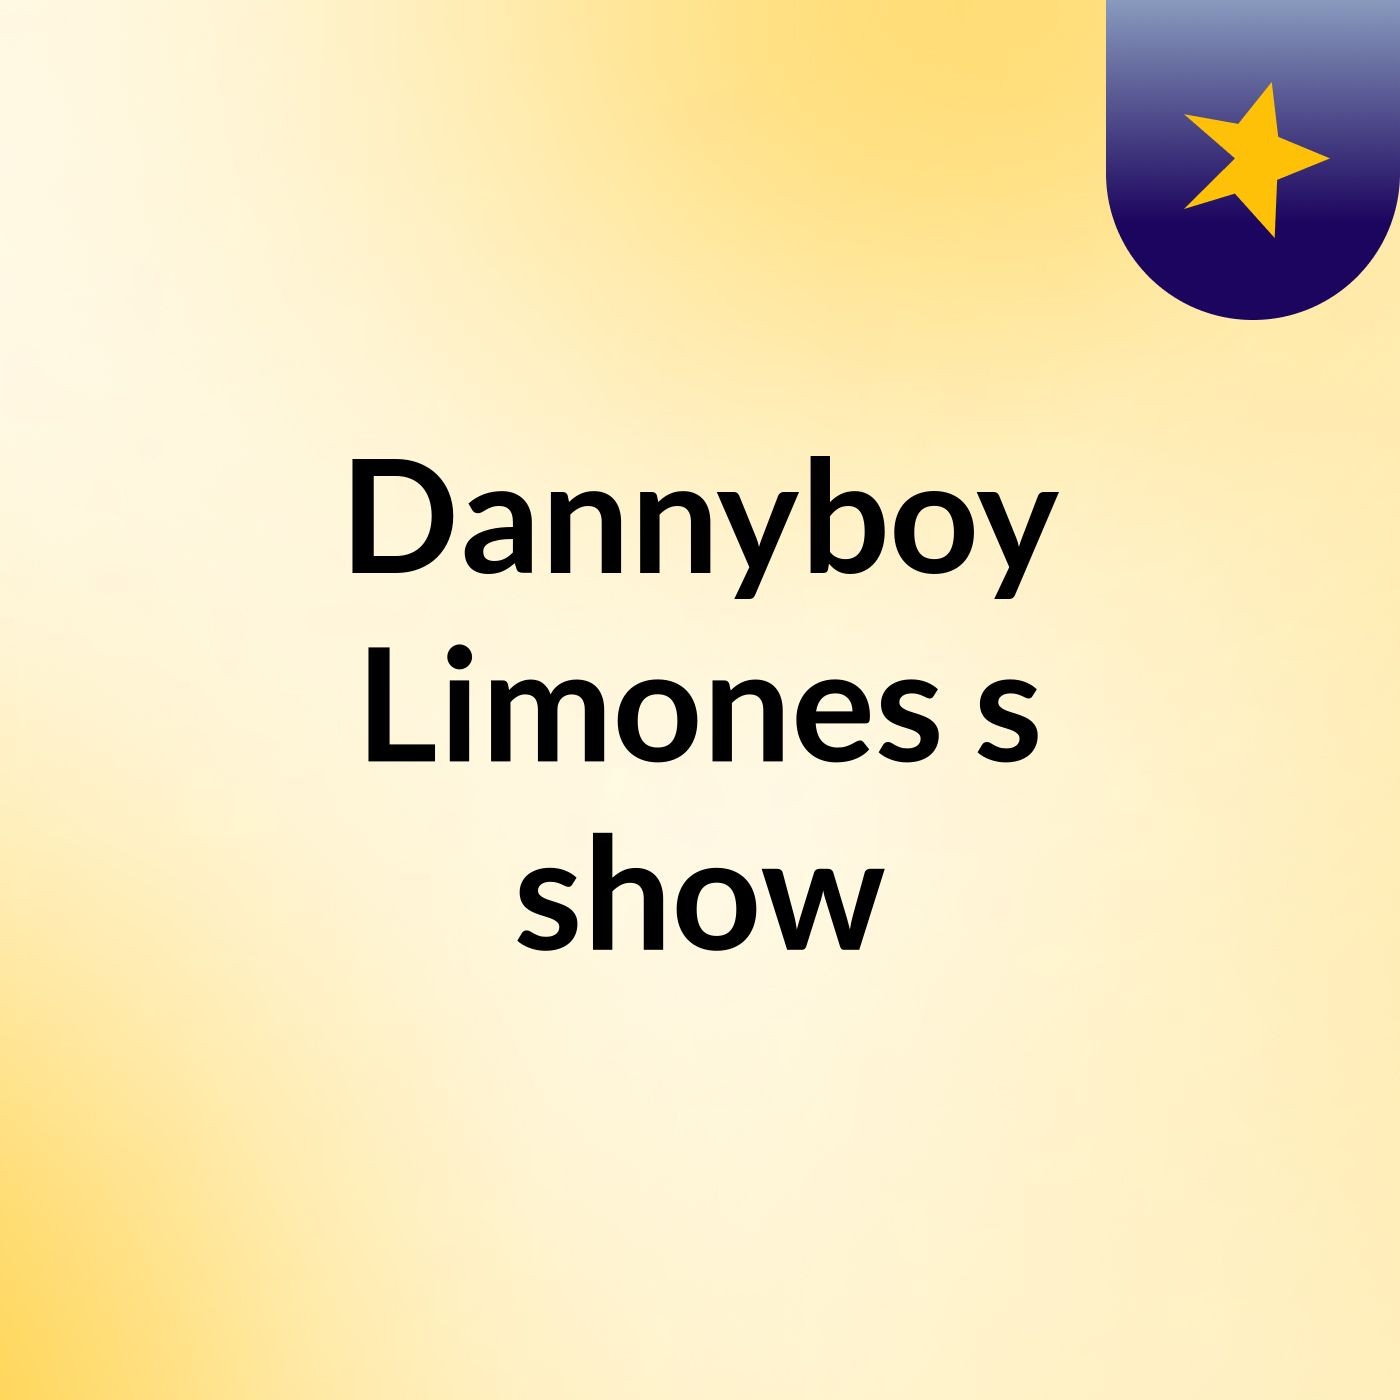 Episode 13 - Dannyboy Limones's show